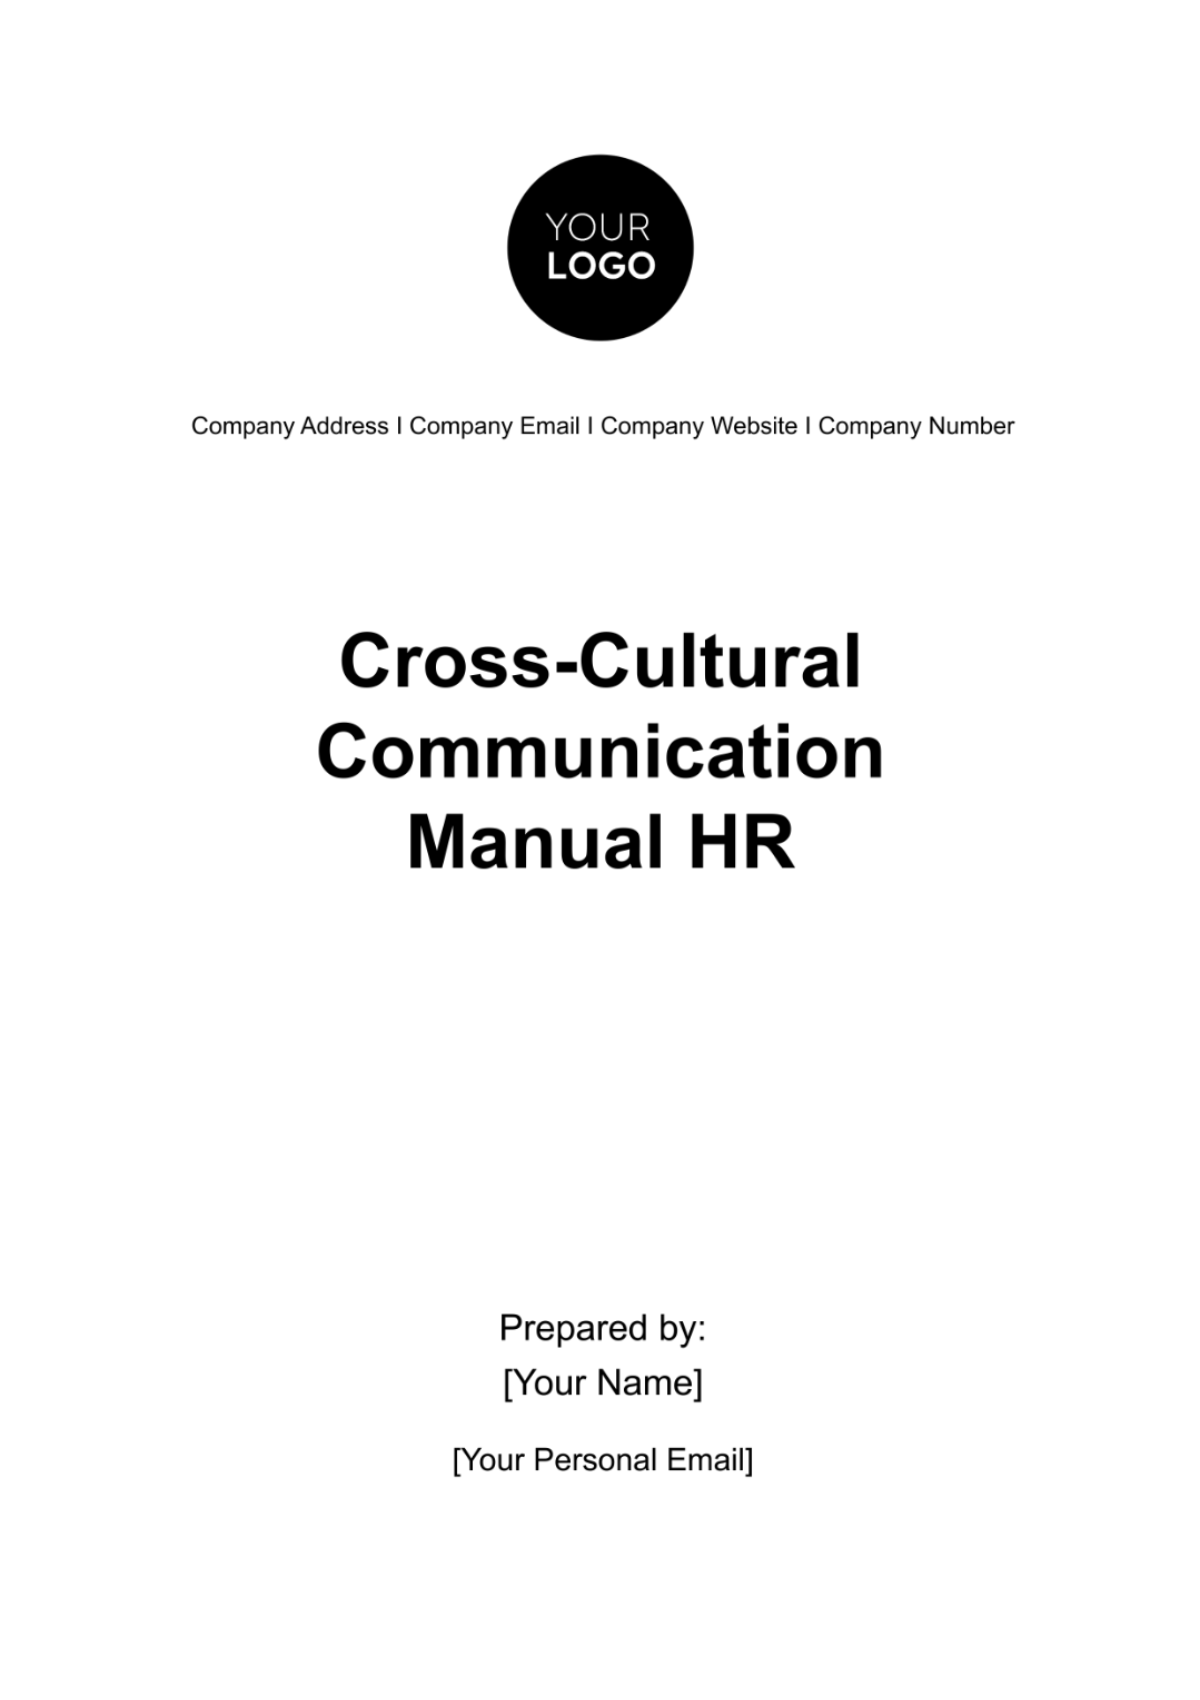 Cross-Cultural Communication Manual HR Template